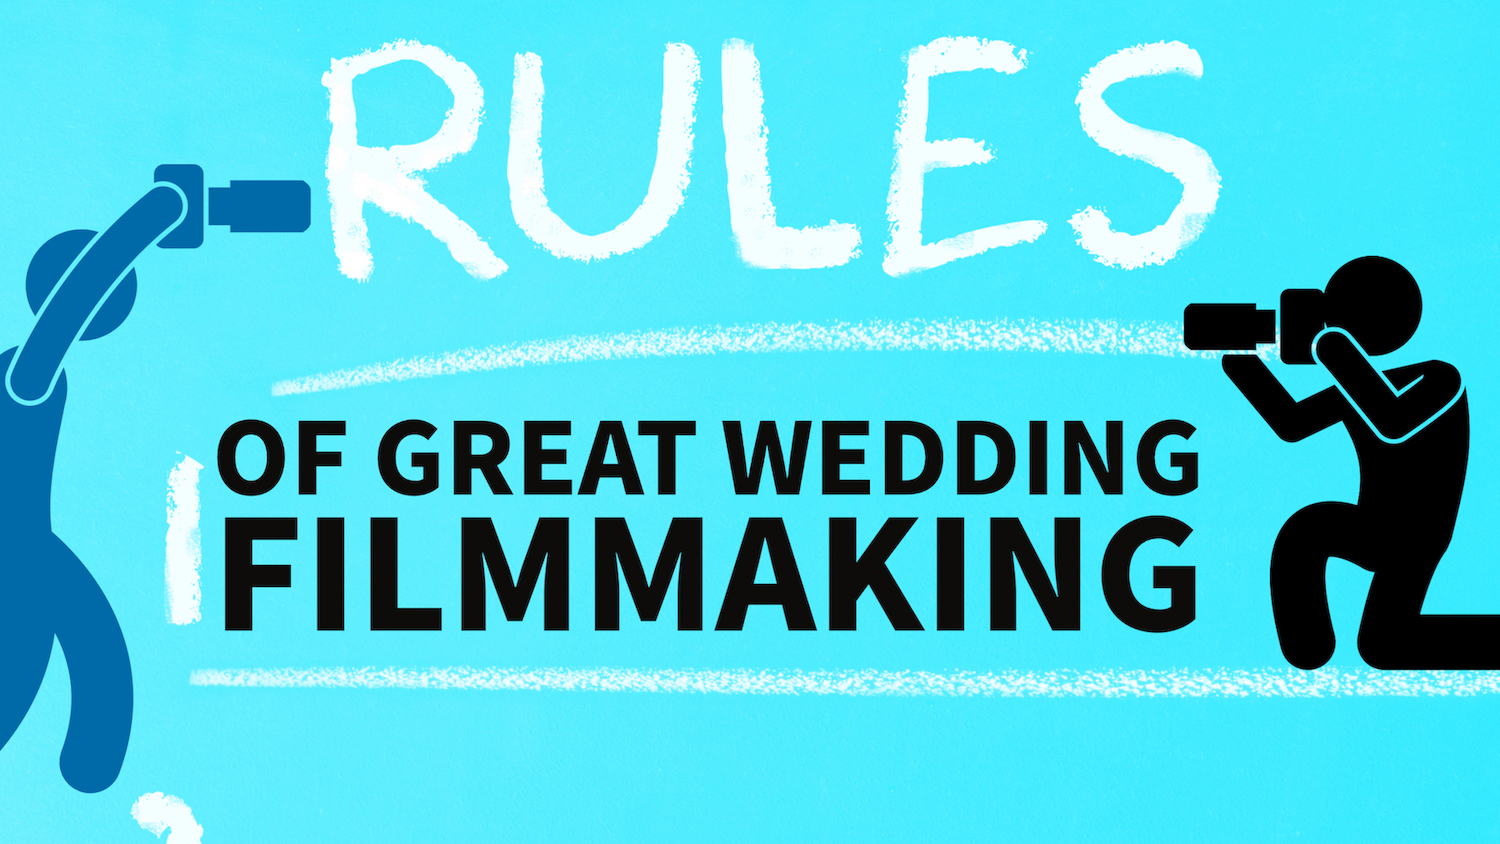 Wedding videographer rules